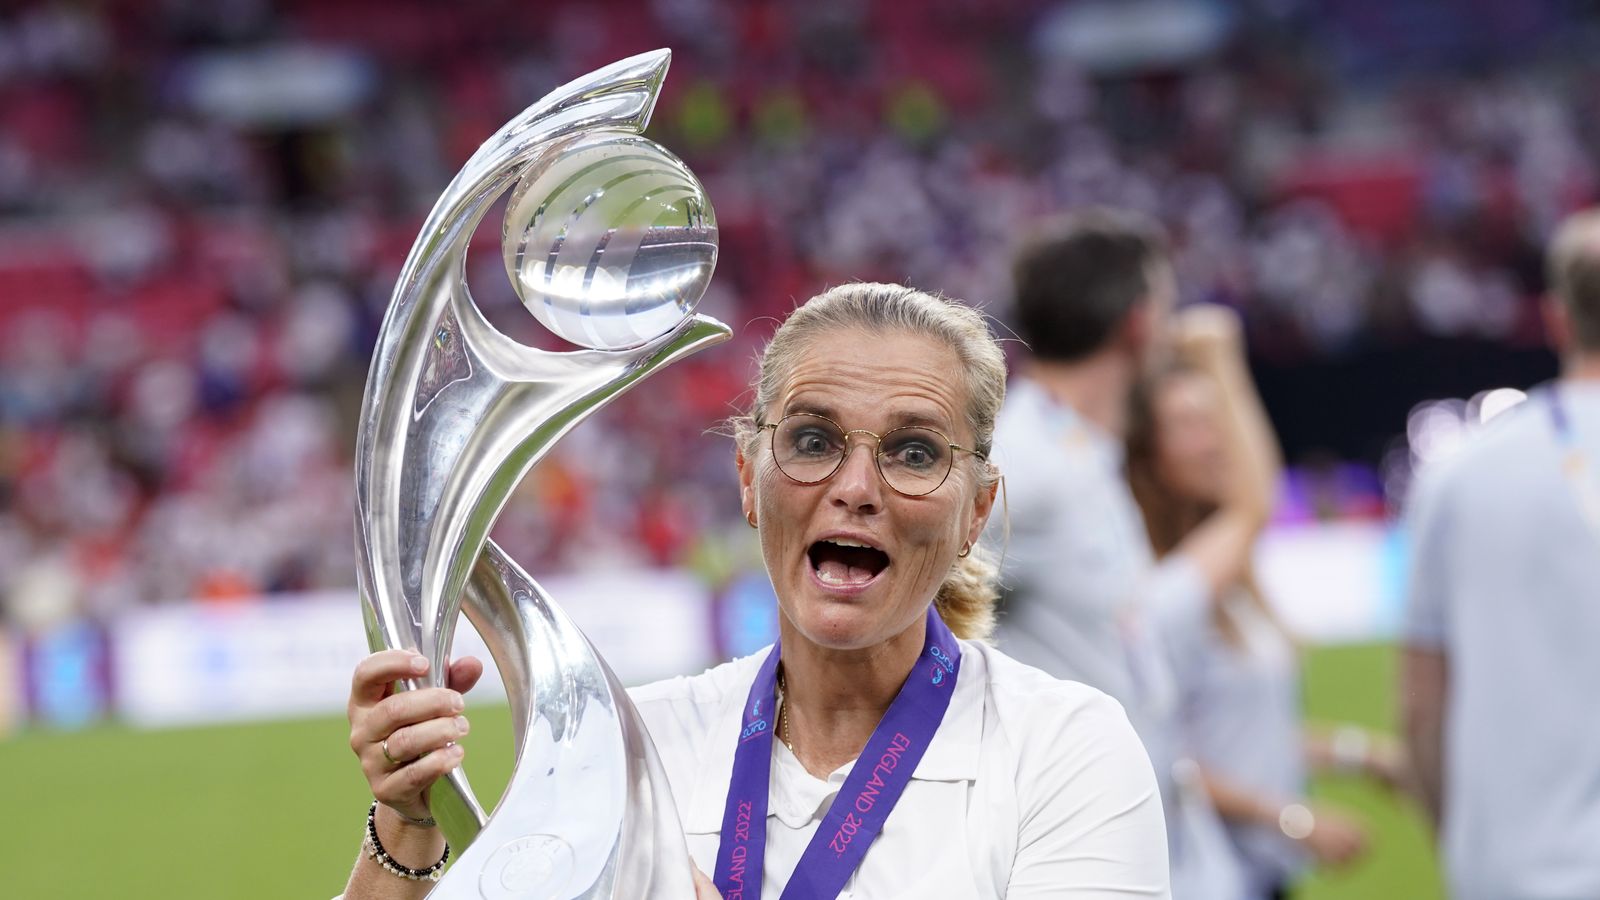 Sarina Wiegman named UEFA Women's Coach of the Year after Euro 2022 triumph